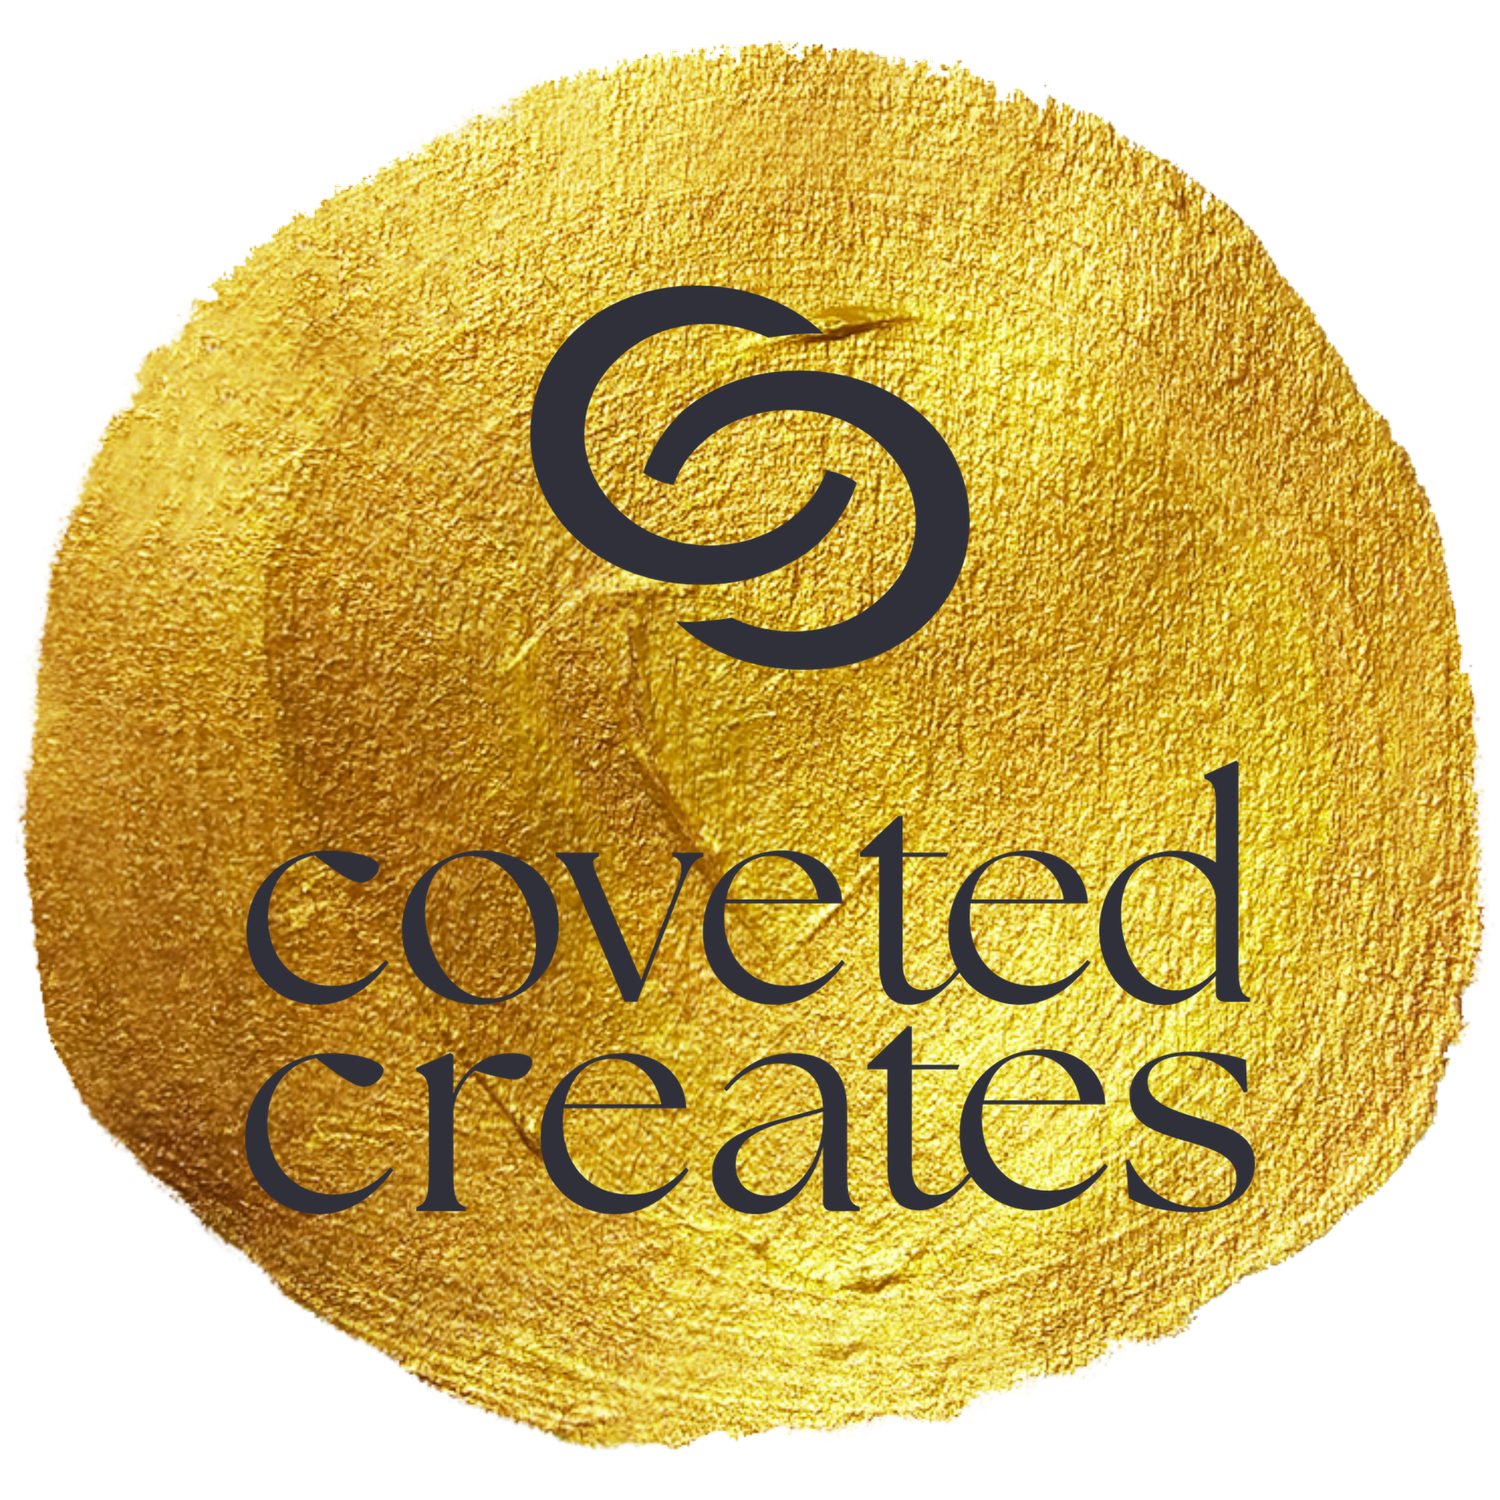 Coveted Creates